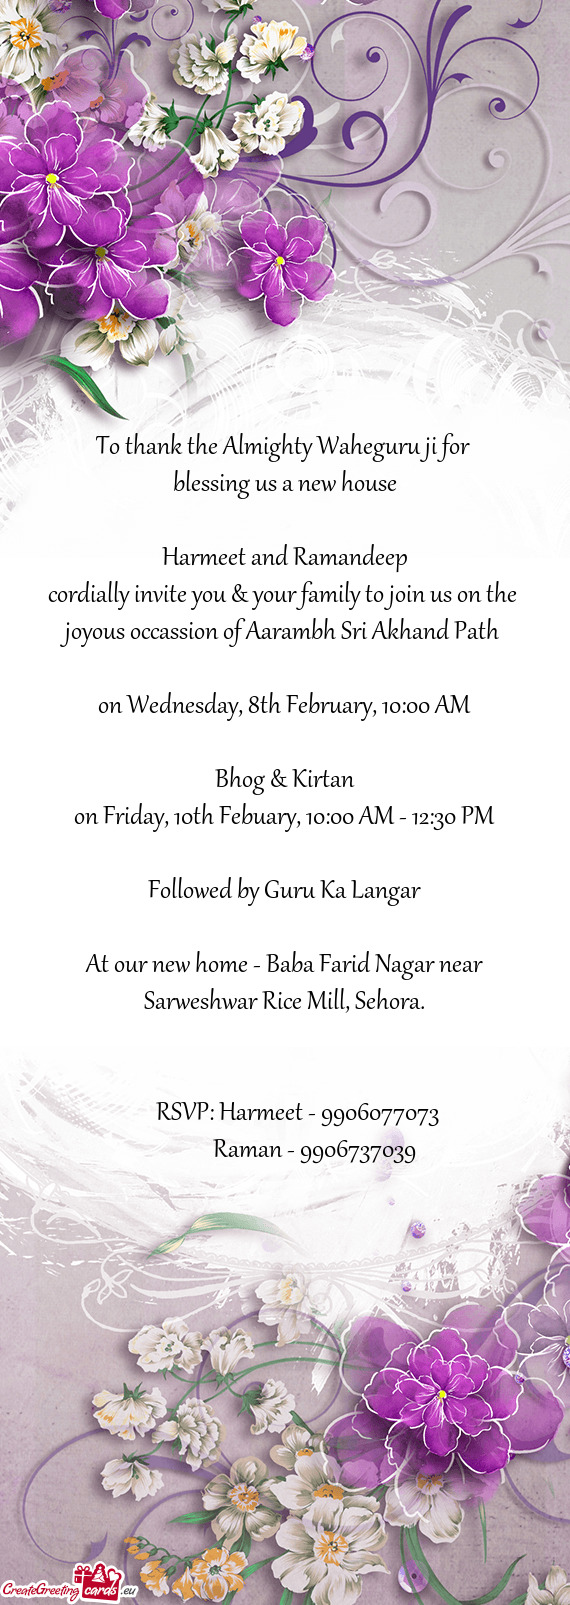 Joyous occassion of Aarambh Sri Akhand Path